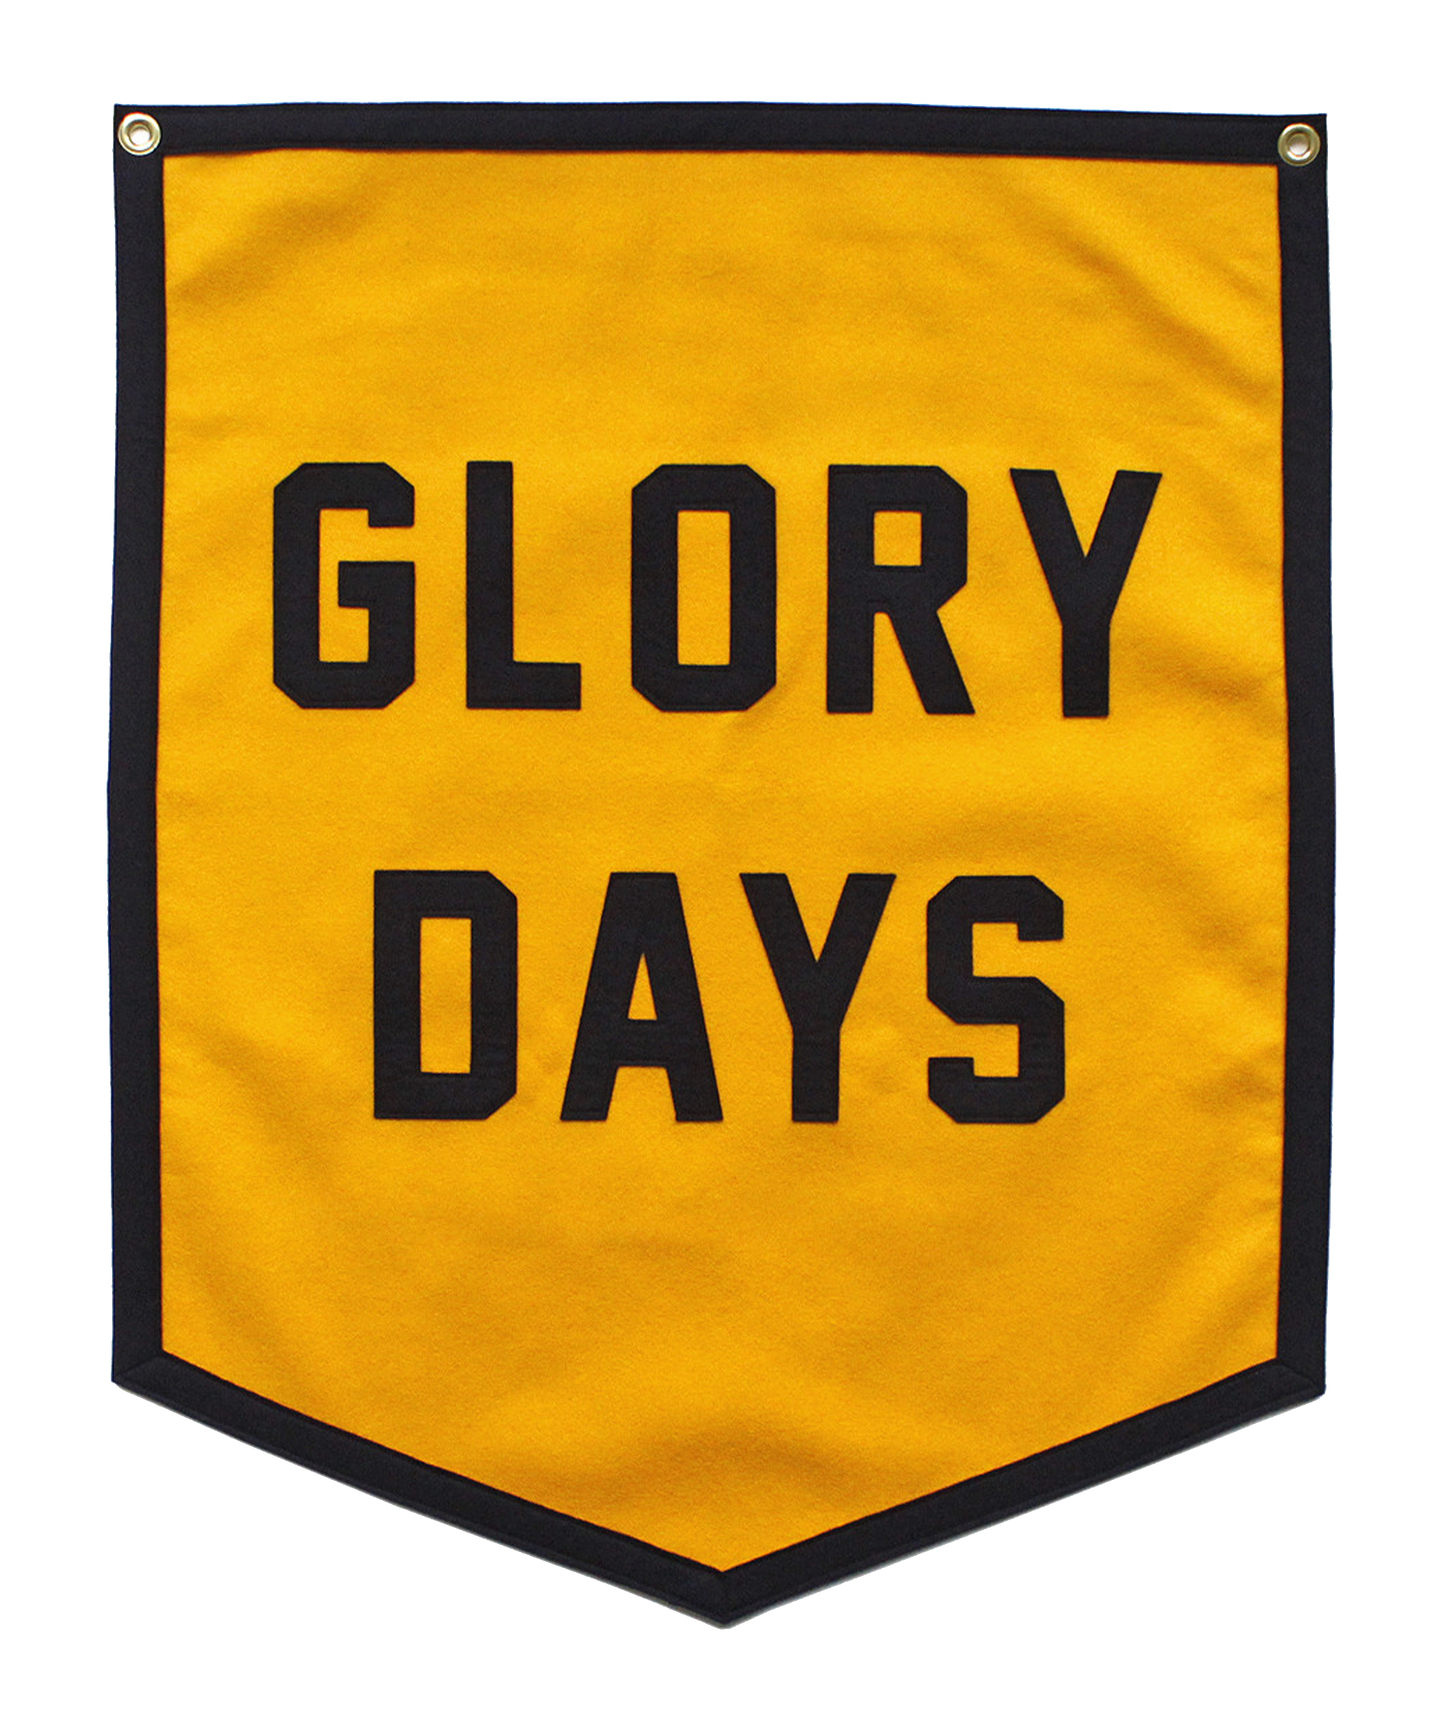 Glory Days Championship Banner